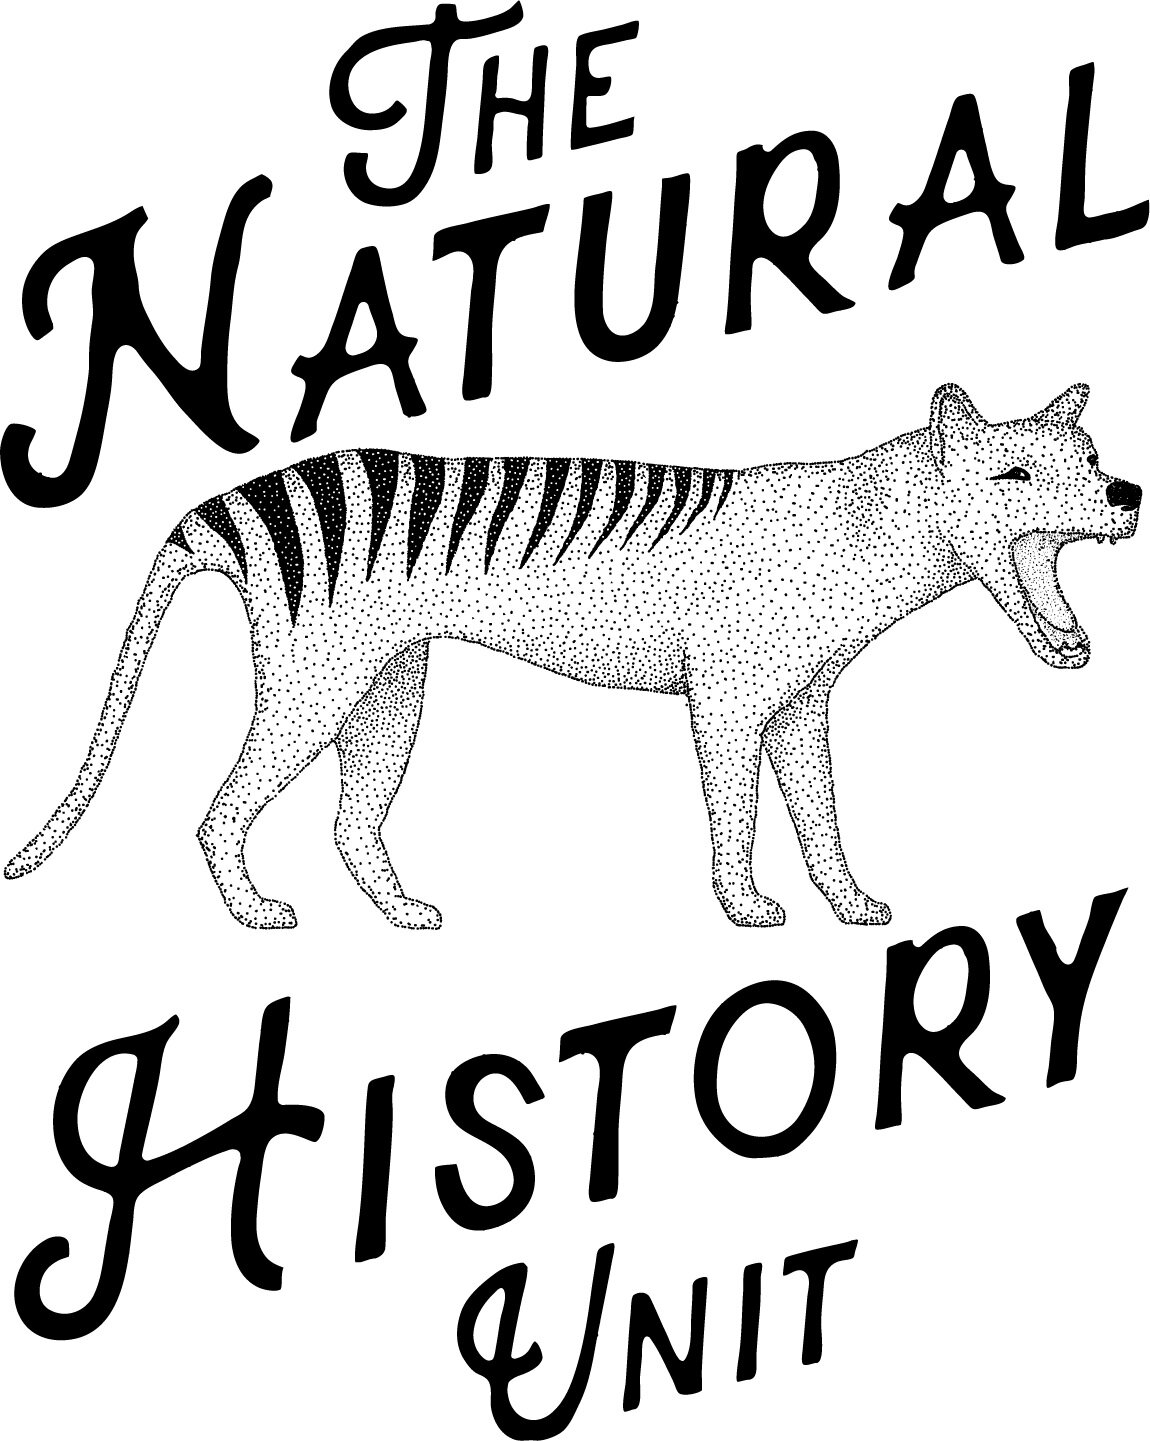 The Natural History Unit